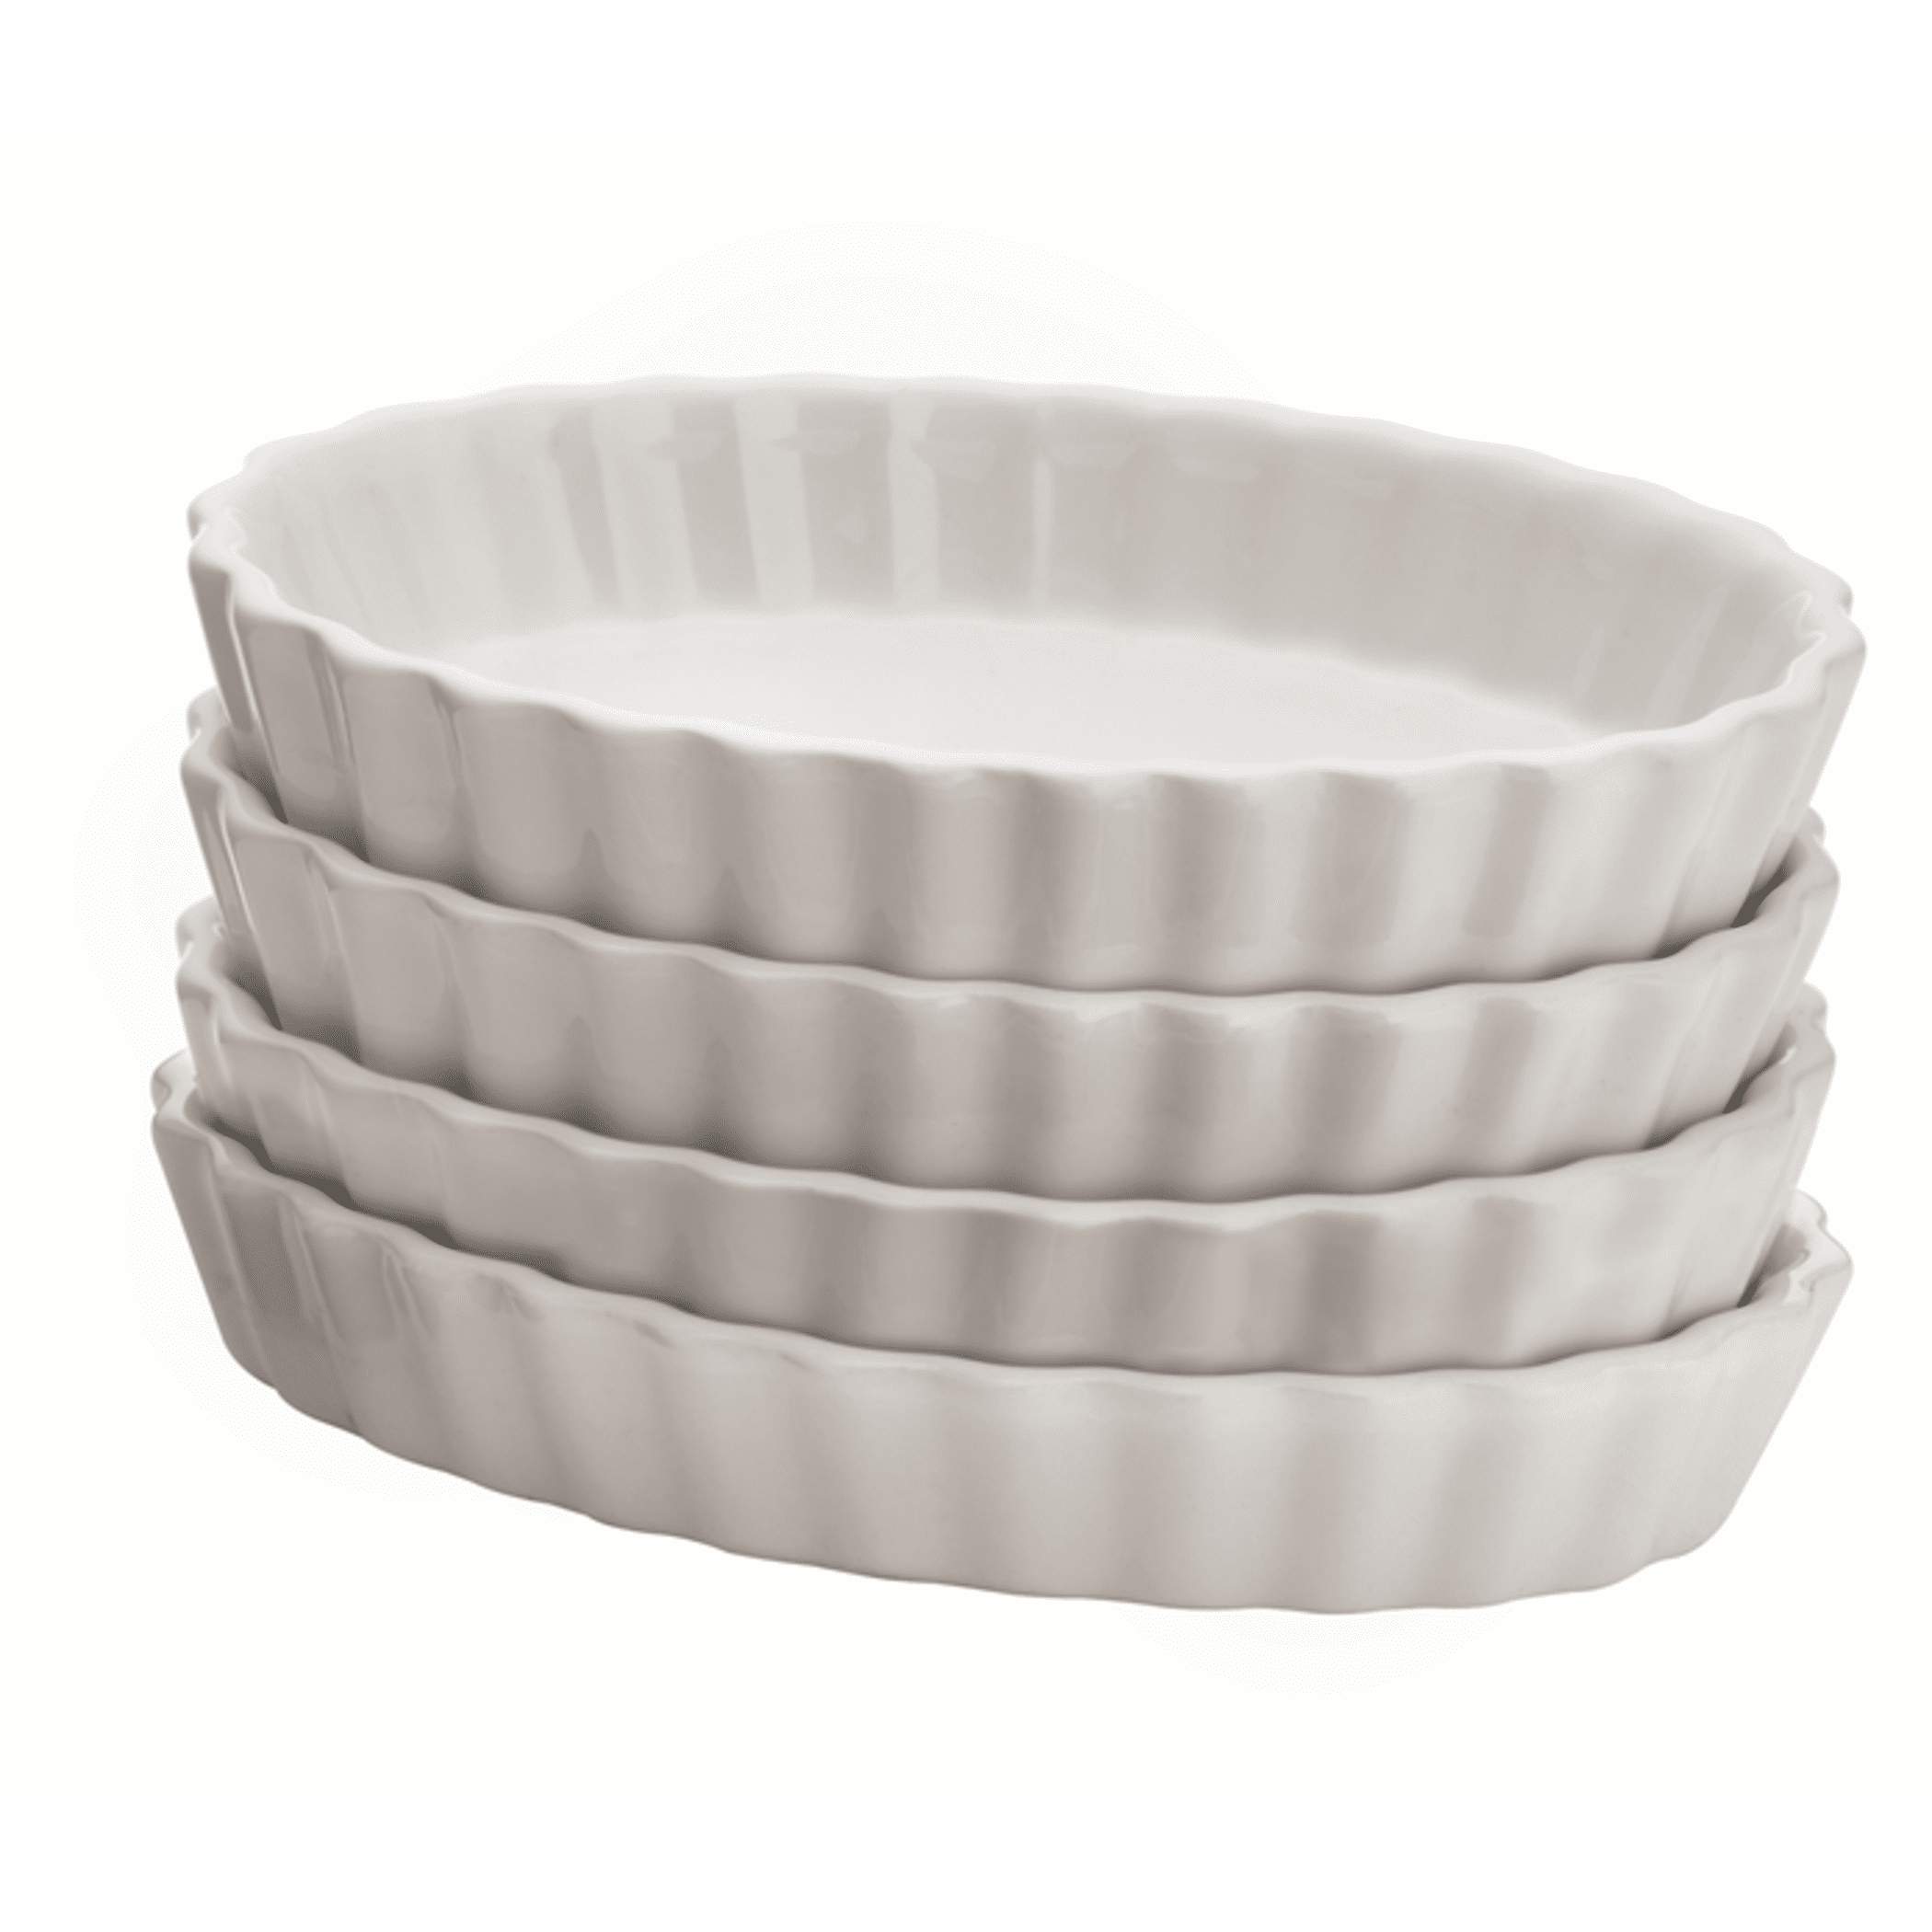 DOWAN 6er-Set Soufflé Souffle Förmchen Pastetenform Näpfchen Auflaufförmchen aus Porzellan 9 cm Ø / 3,3 cm Höhe Weiß für Fondants Creme Brûlée oder Muffins